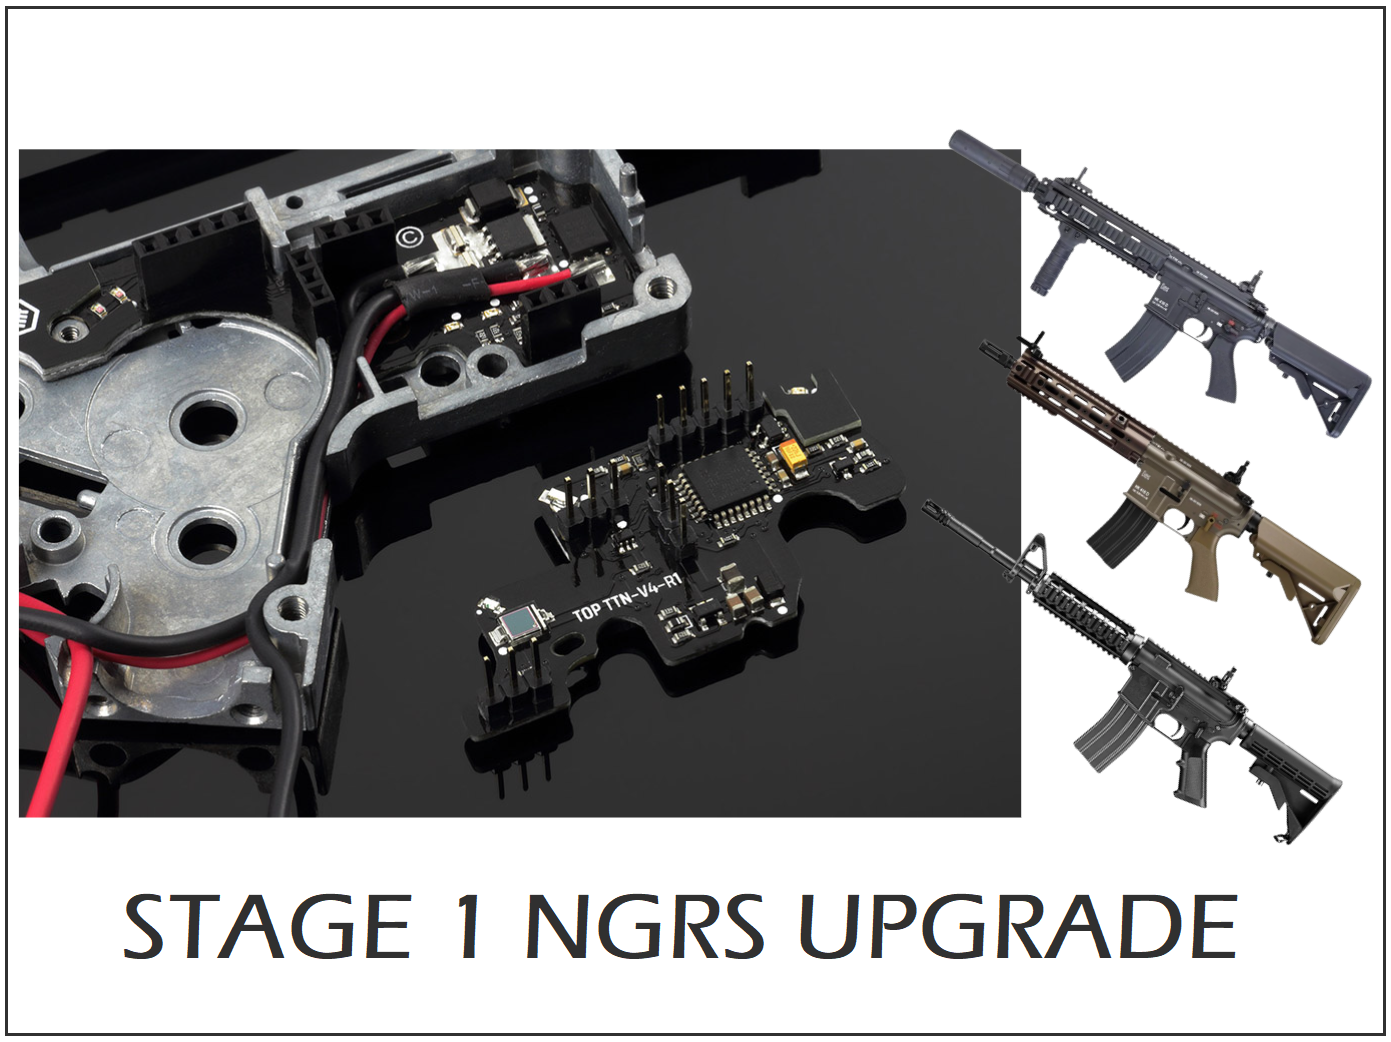 Stage 1 Upgrade - Tokyo Marui M4/416/MK18/URG-I Recoil Shock